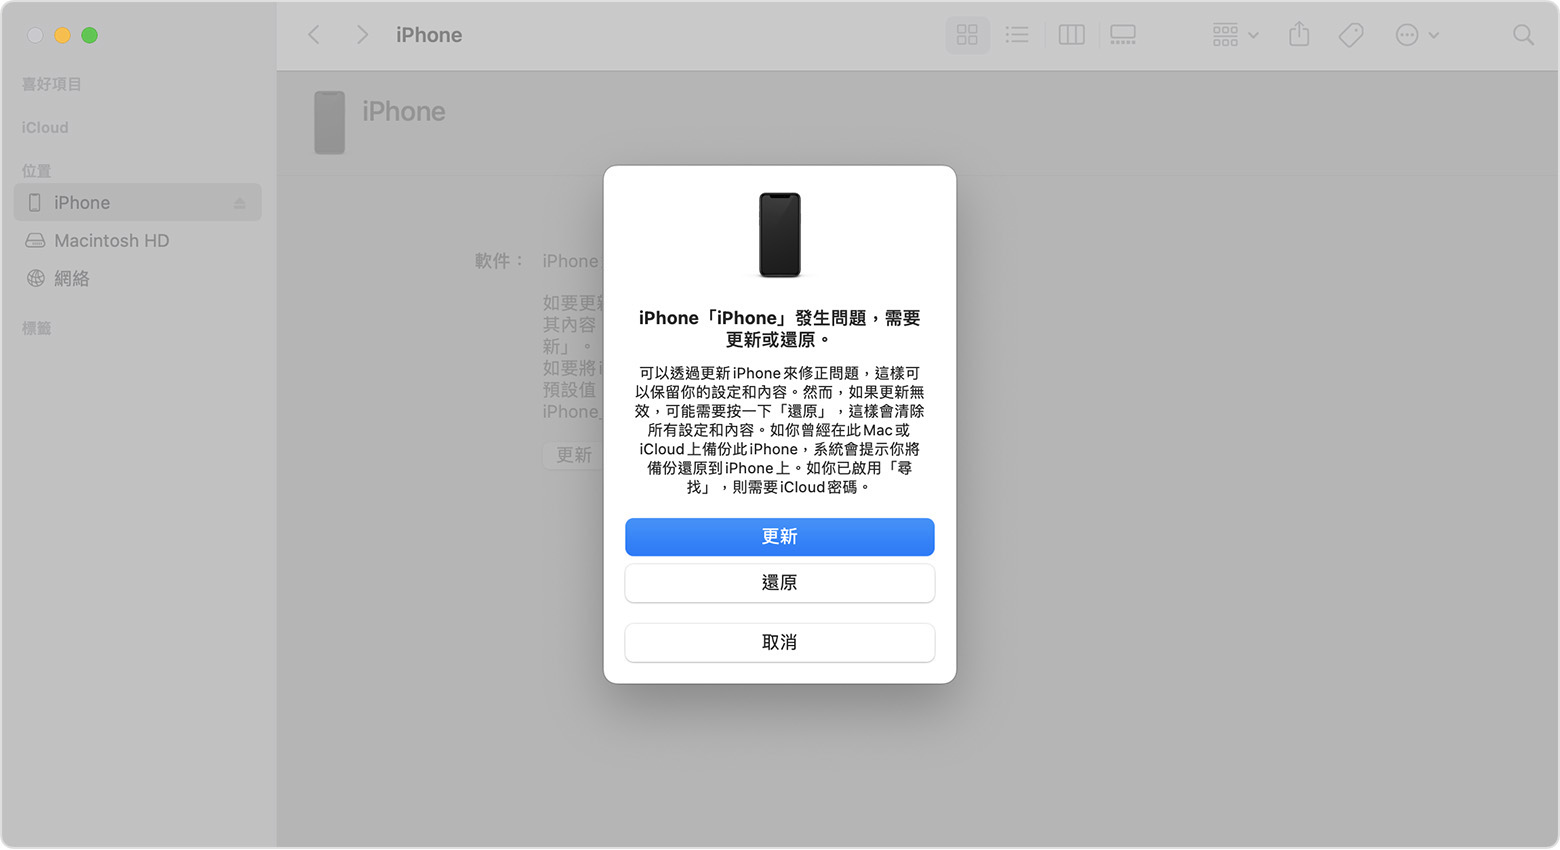 Finder 視窗正在顯示提示，當中可選擇更新或還原 iPhone。選擇了「更新」。